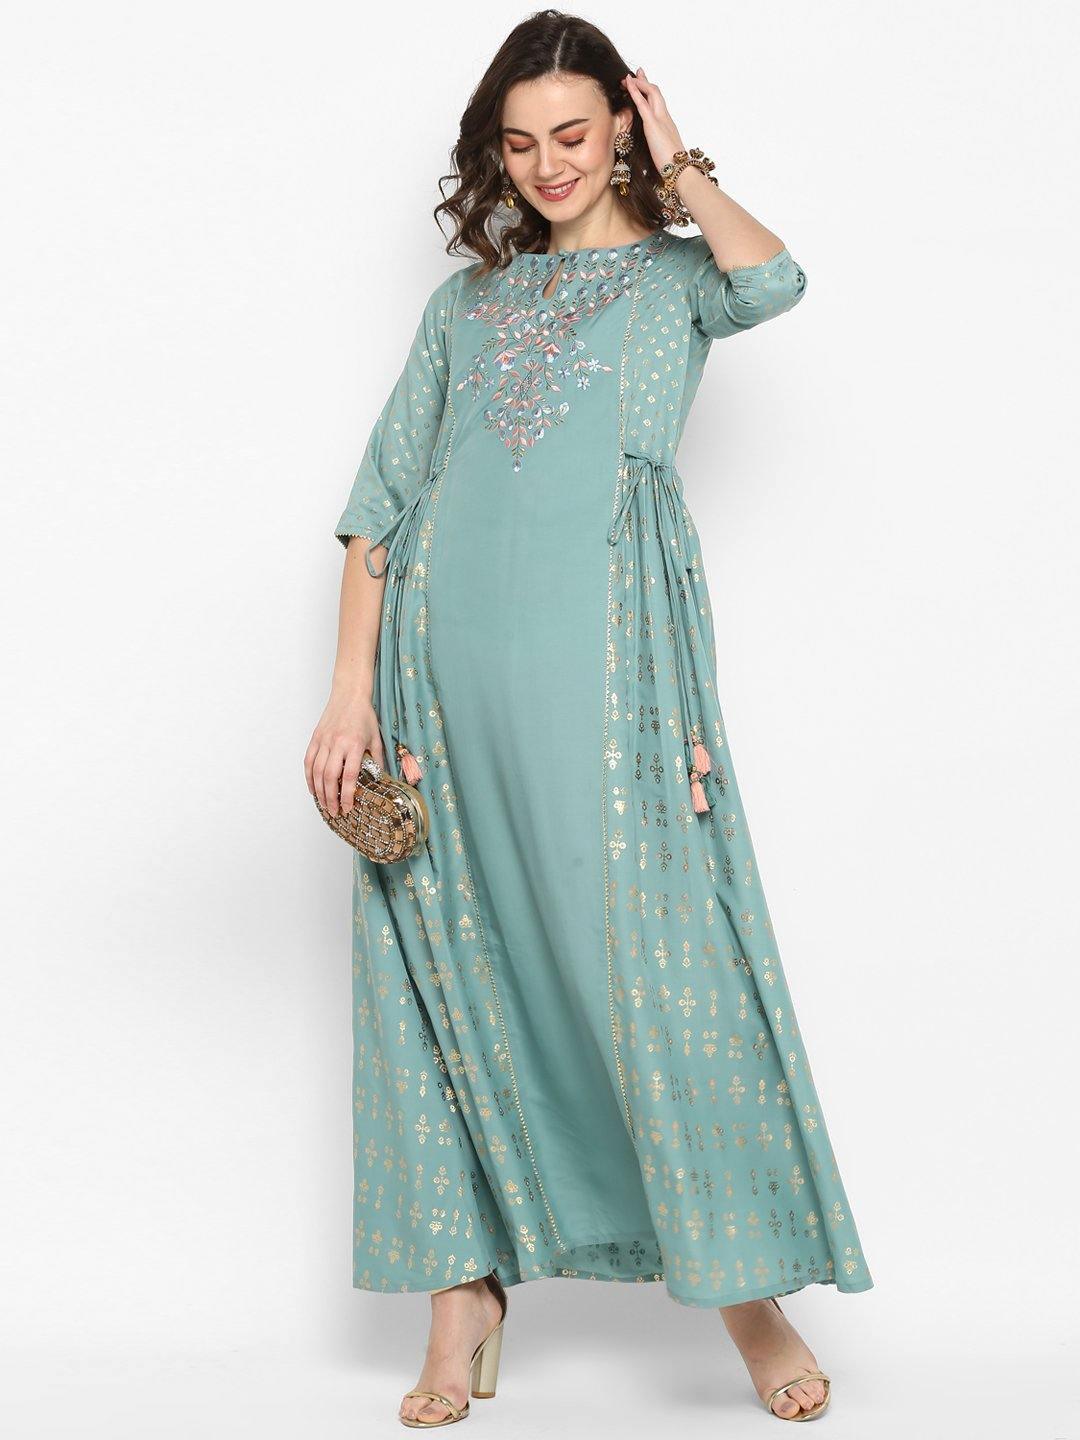 Green Rayon Embroidered Flared Ethnic Dress Janasya Gold